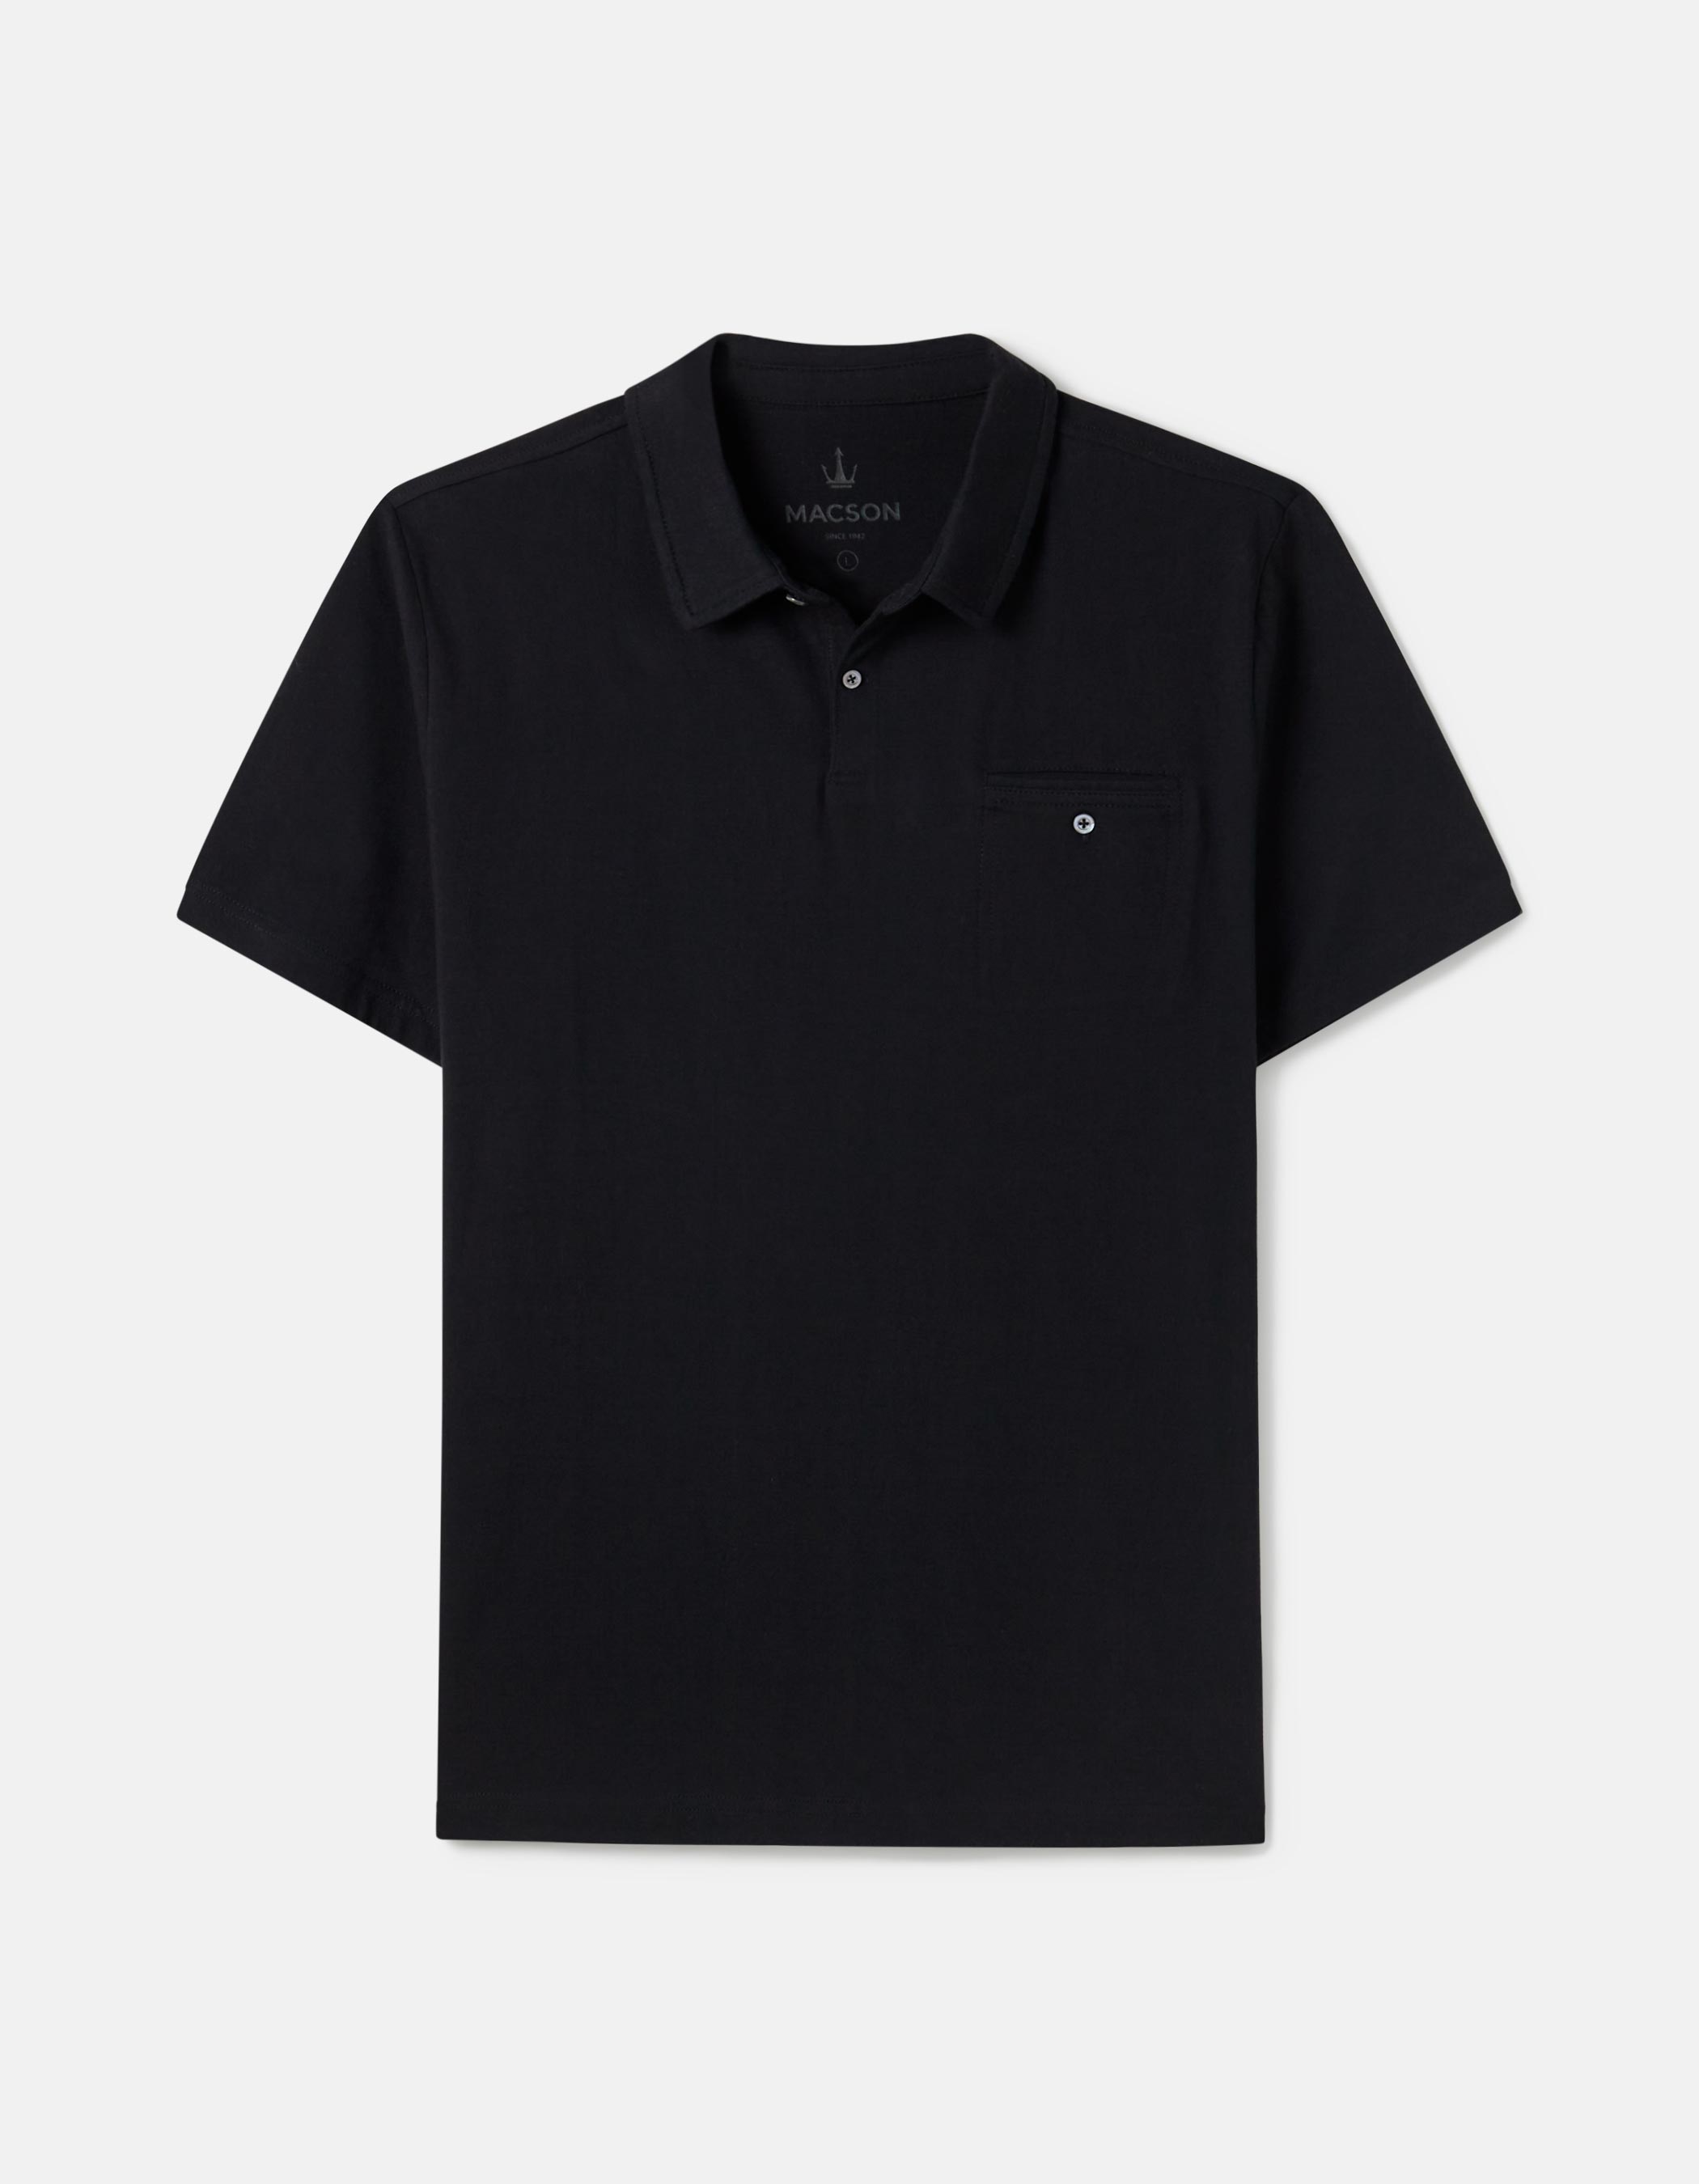 Black pocket polo shirt